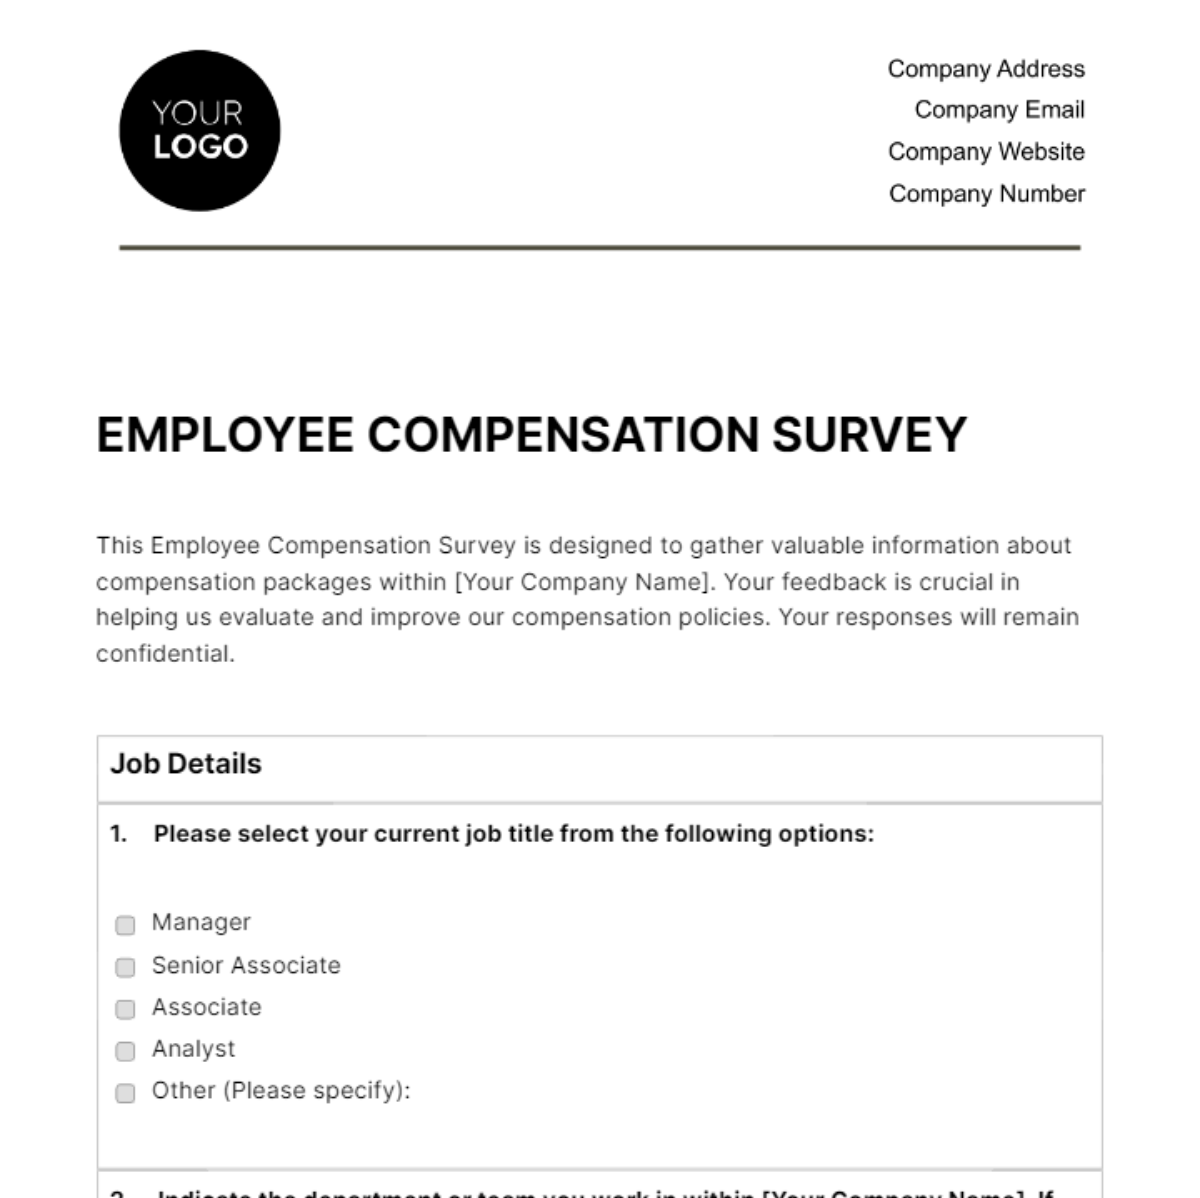 Employee Compensation Survey HR Template